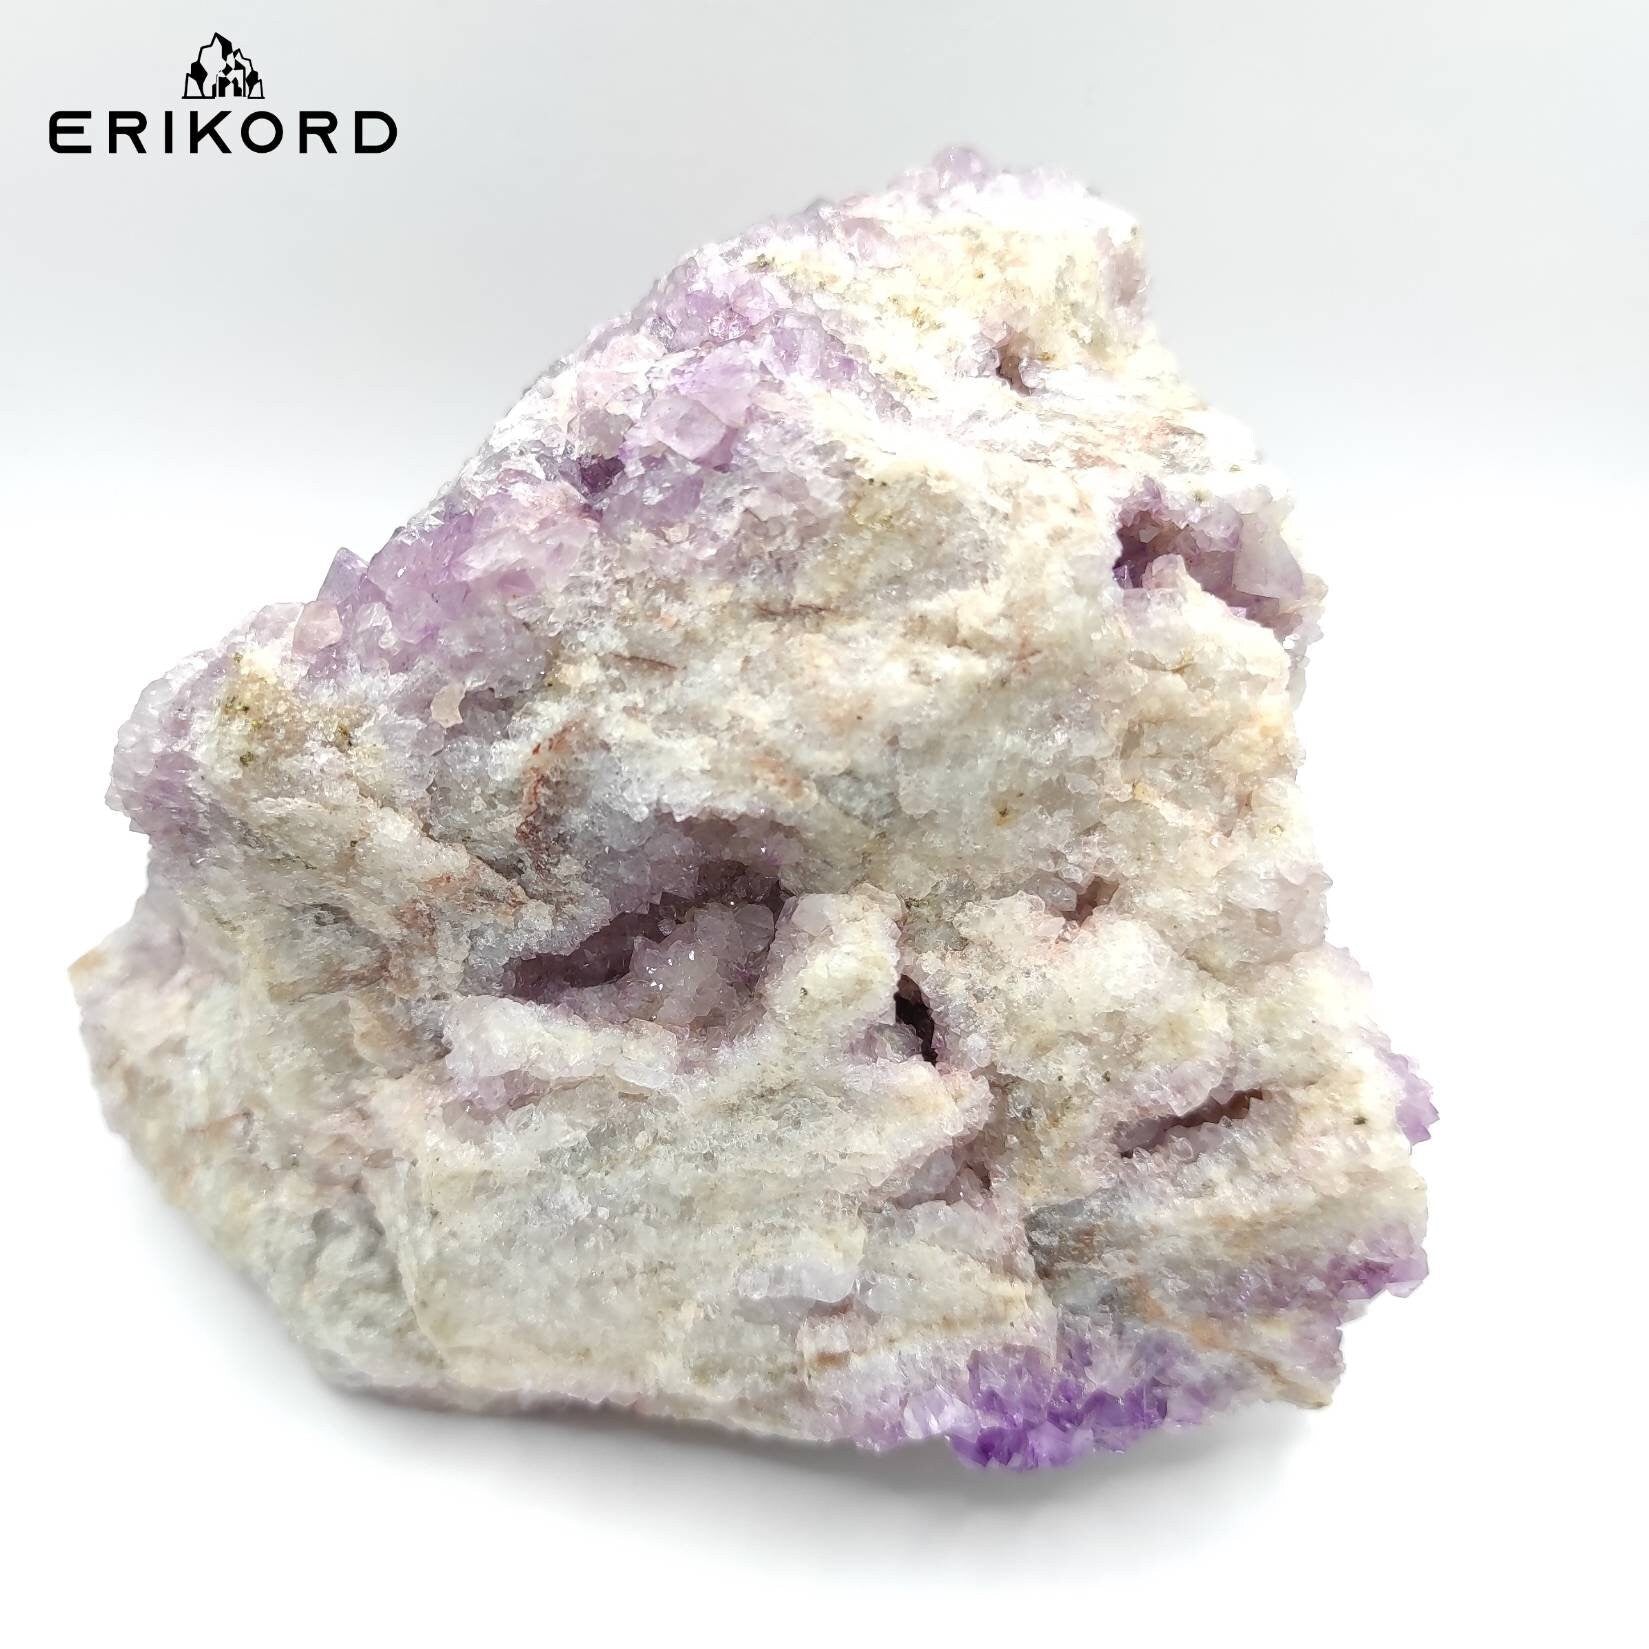 857g Thunder Bay Amethyst Crystal - Natural Amethyst Mineral Specimen - Ontario Canada - Spirit Quartz Style Amethyst - Raw Ethical Crystals